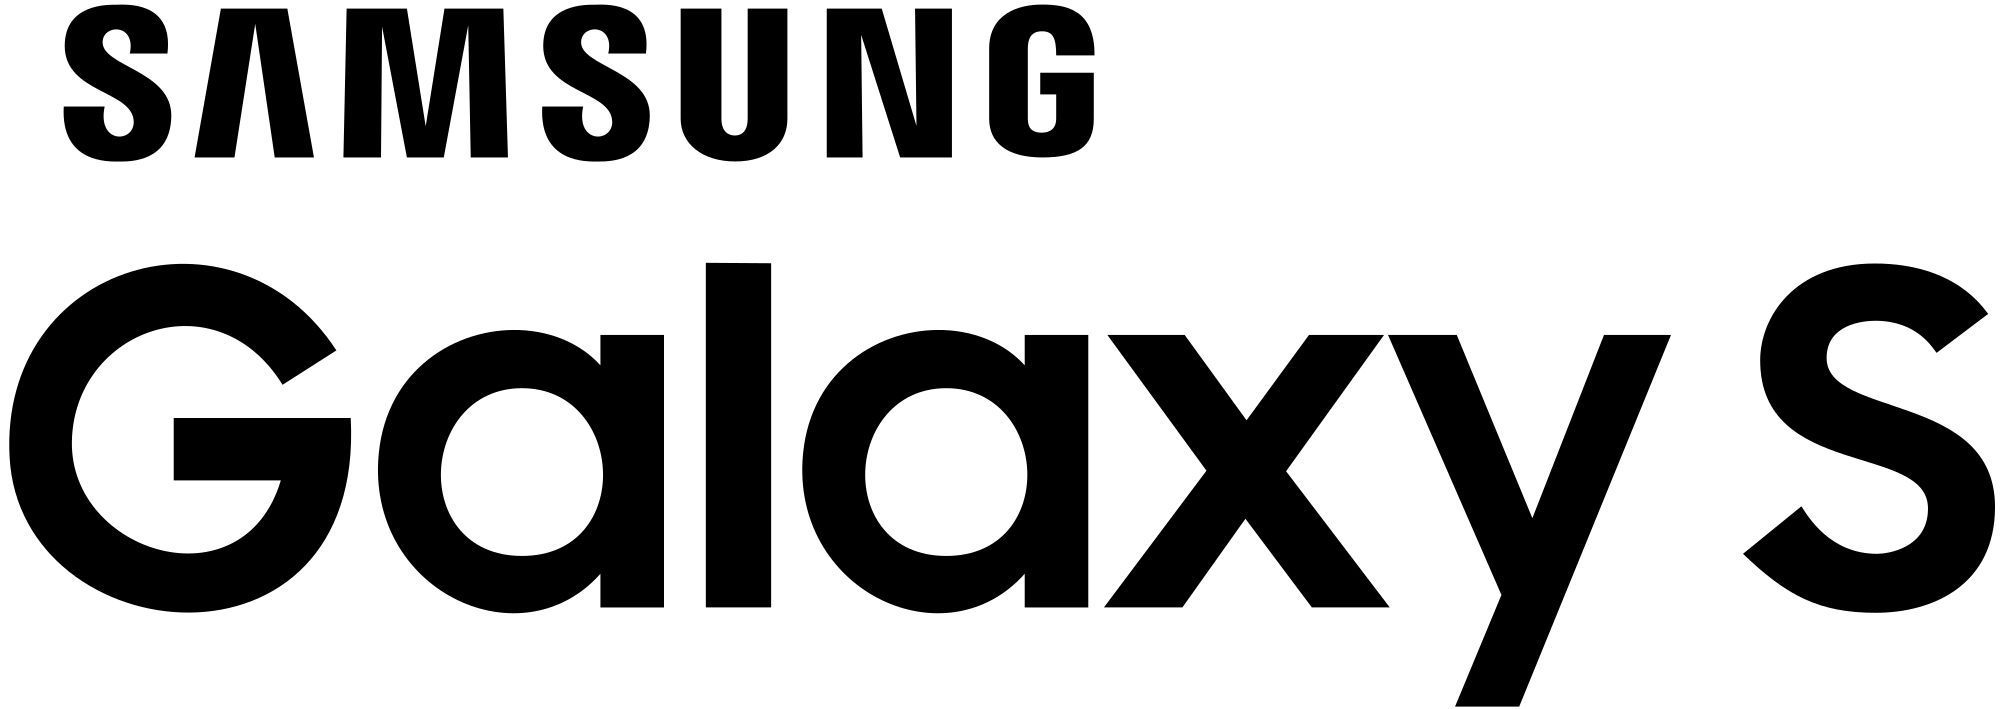 Samsung Galaxy S5 Logo - Samsung Galaxy S new logo.svg